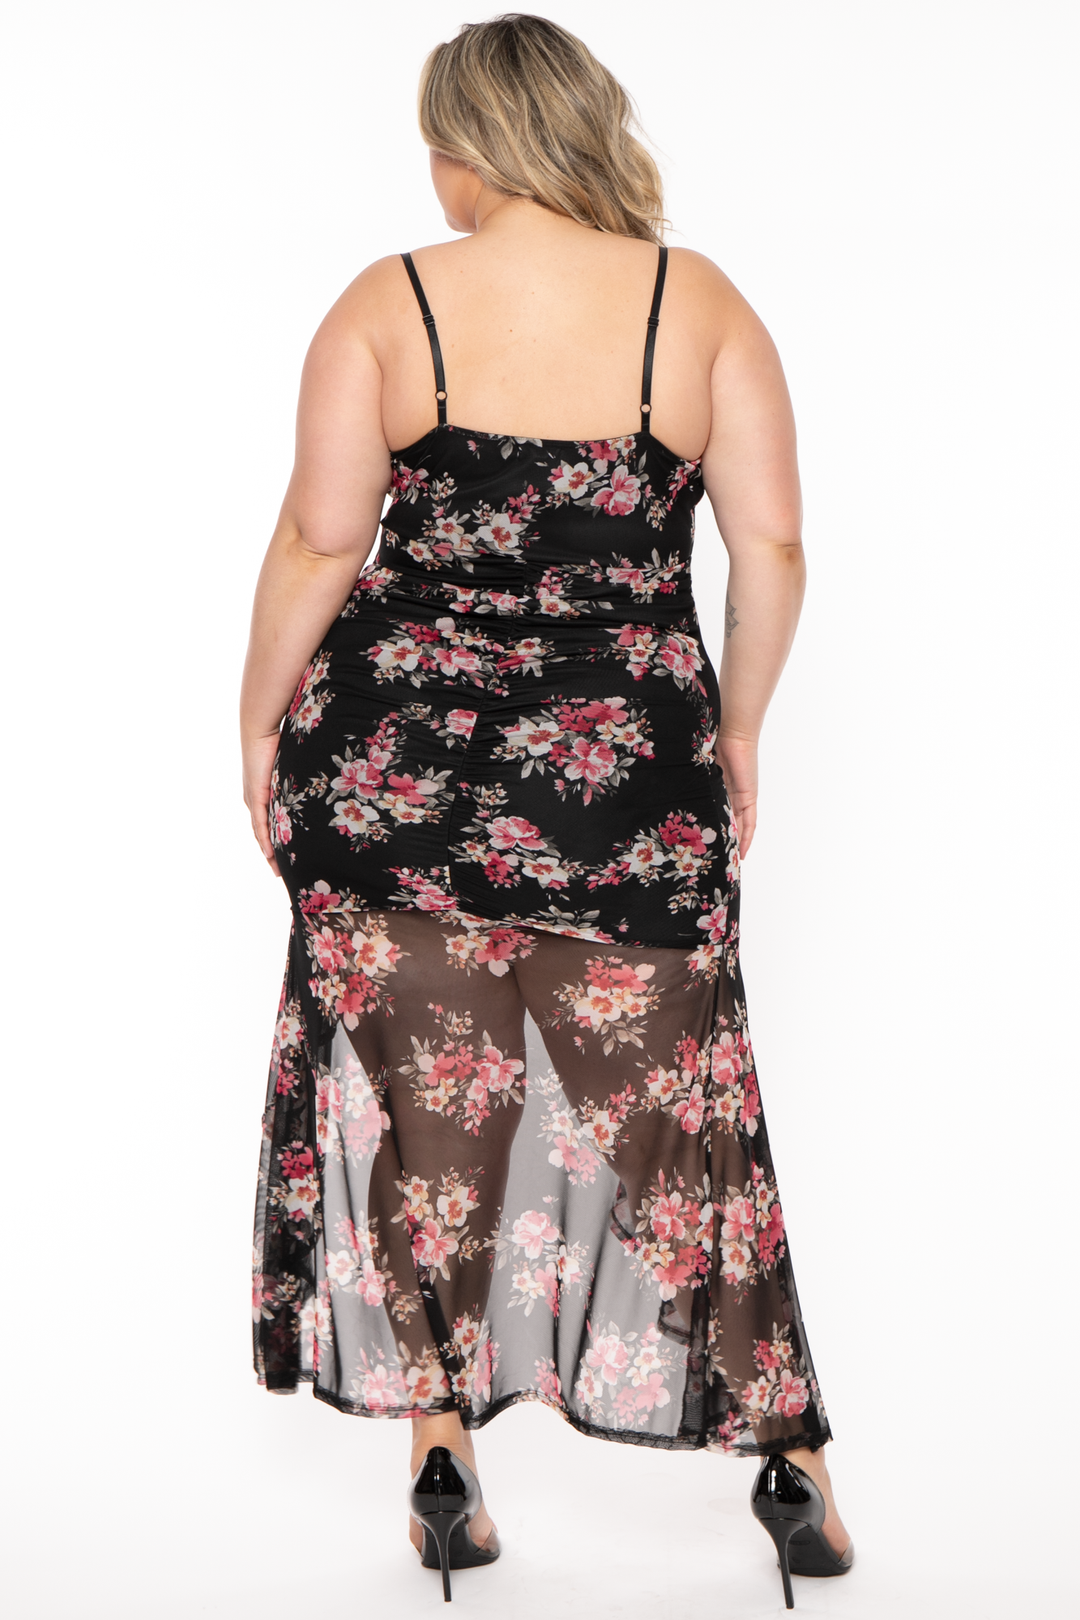 Curvy Sense Dresses Plus Size Karisma Ruffle Printed Mesh Dress - Black